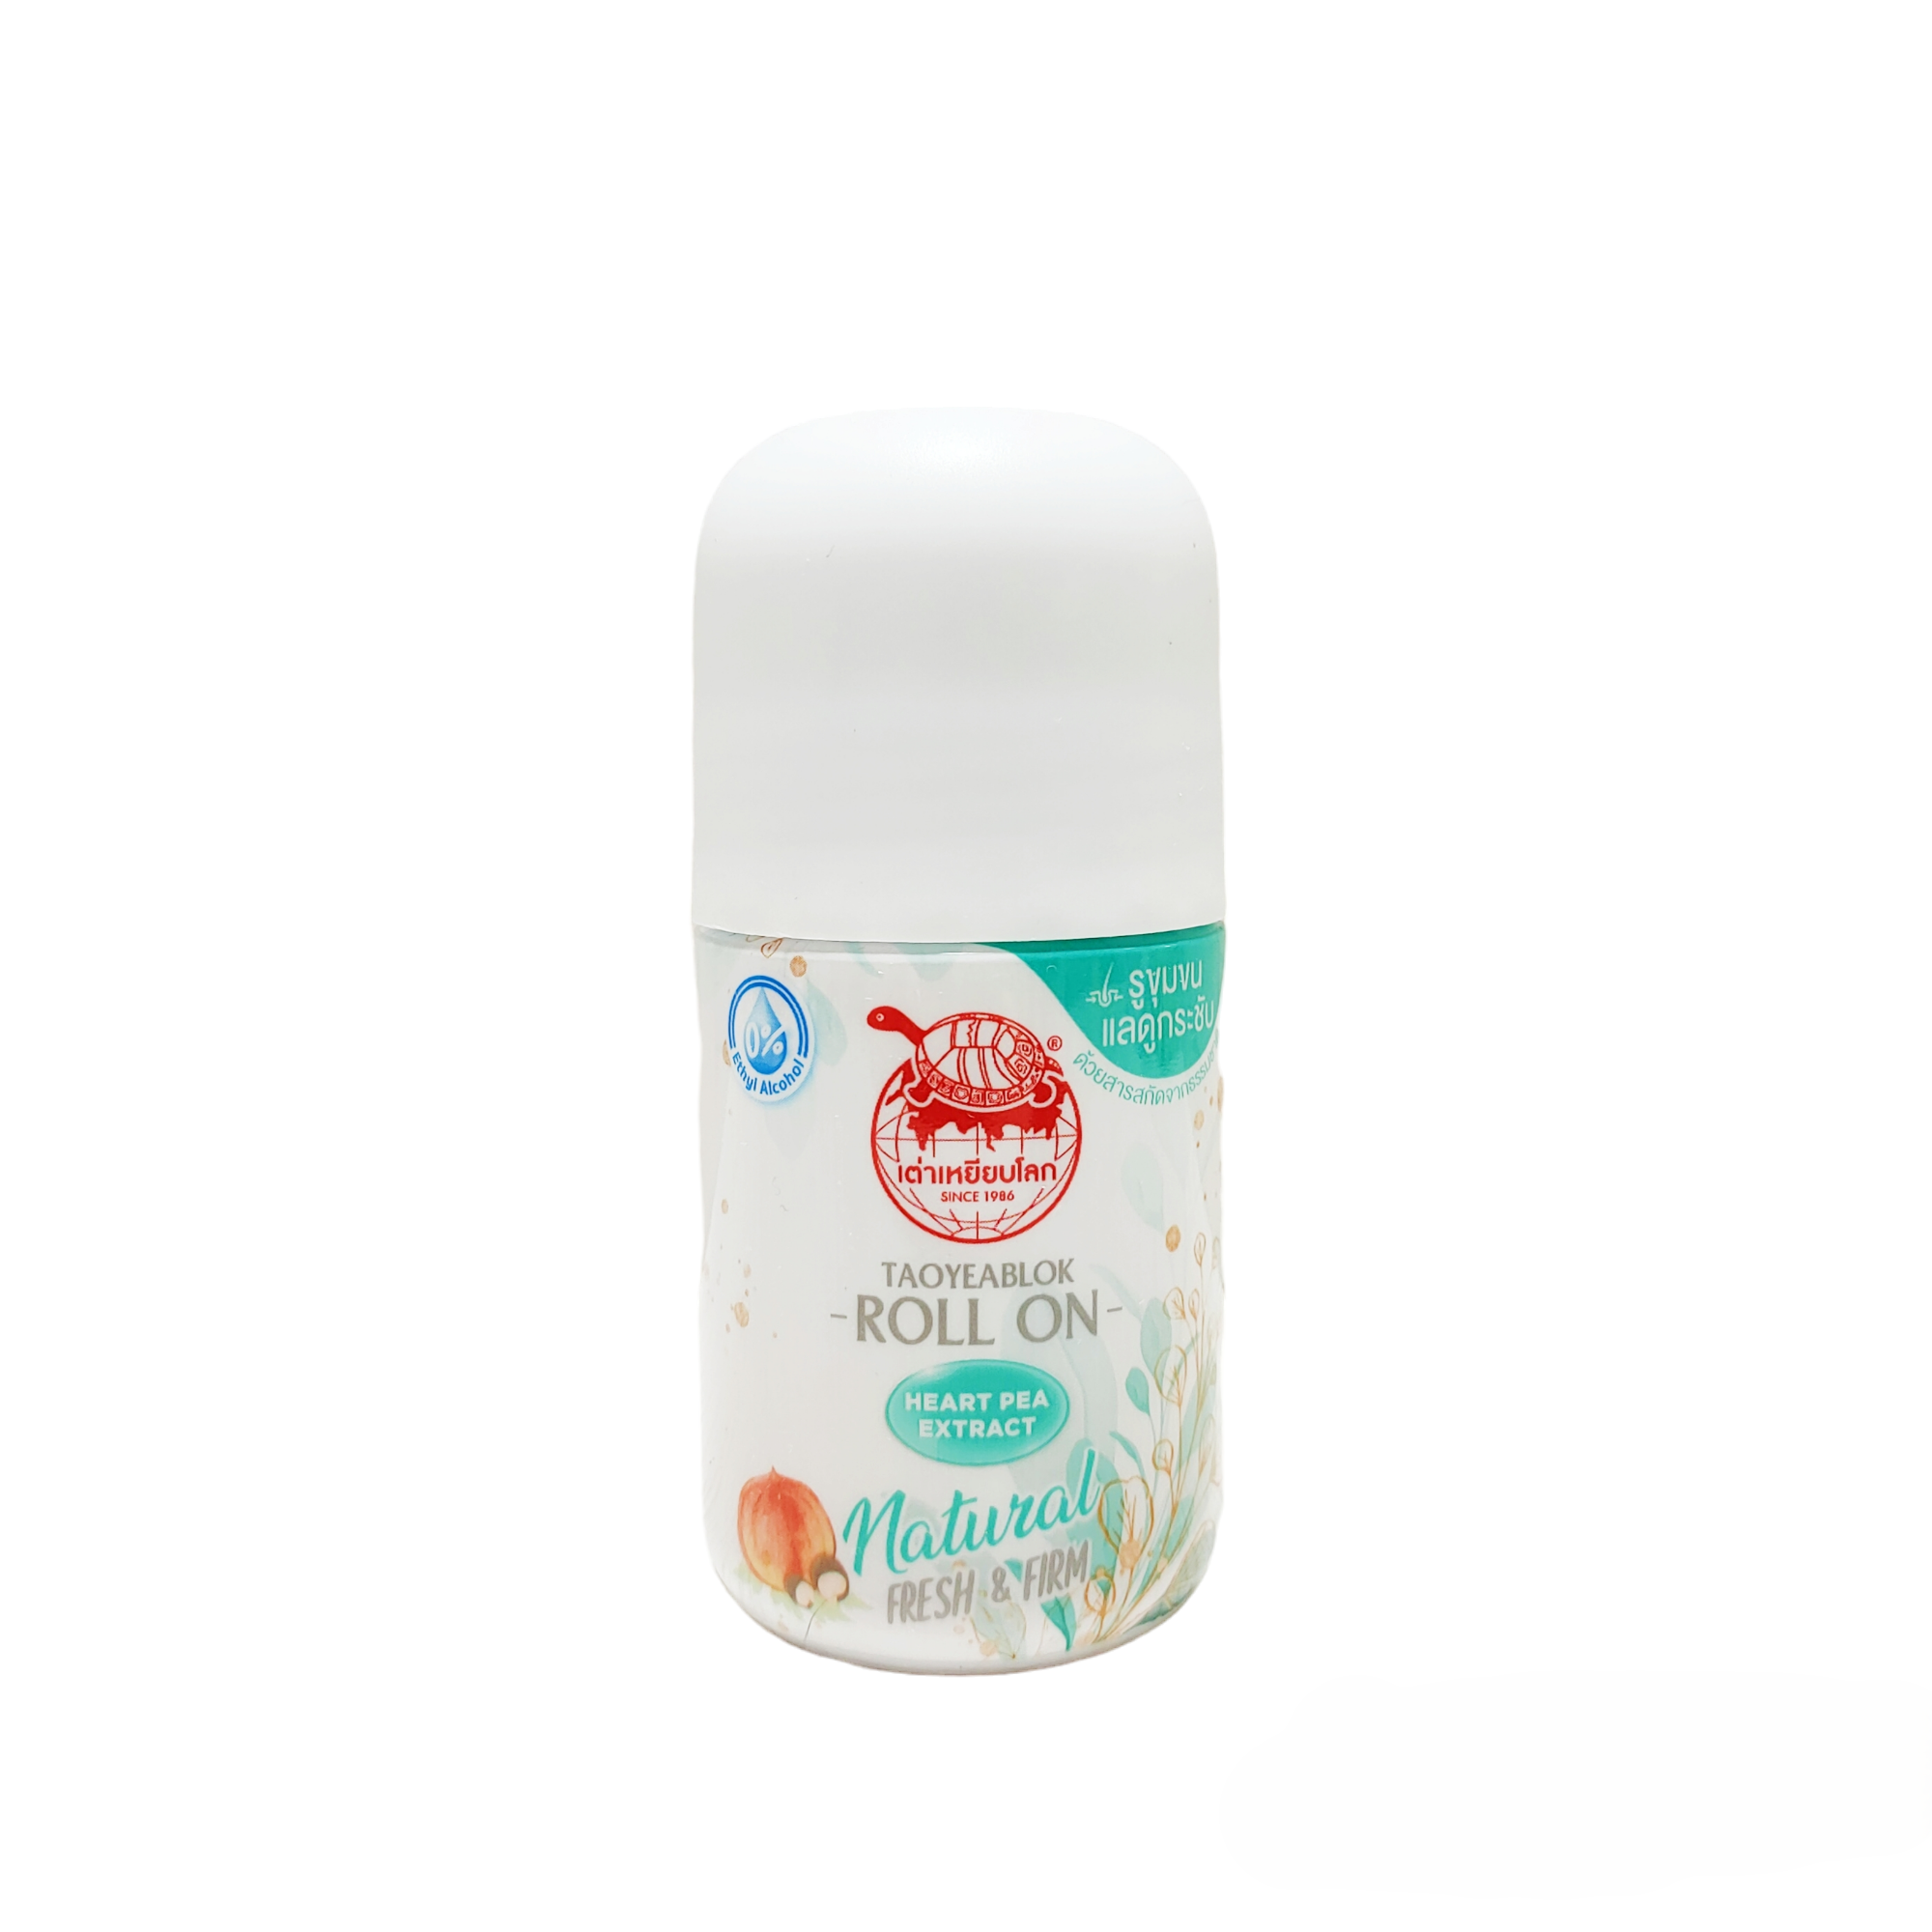 Taoyeablok New Gen Natural Fresh&Firm Deo Roll On heart pea 30 ml., Натуральный освежающий роликовый дезодорант с защитой кожи 30 мл.